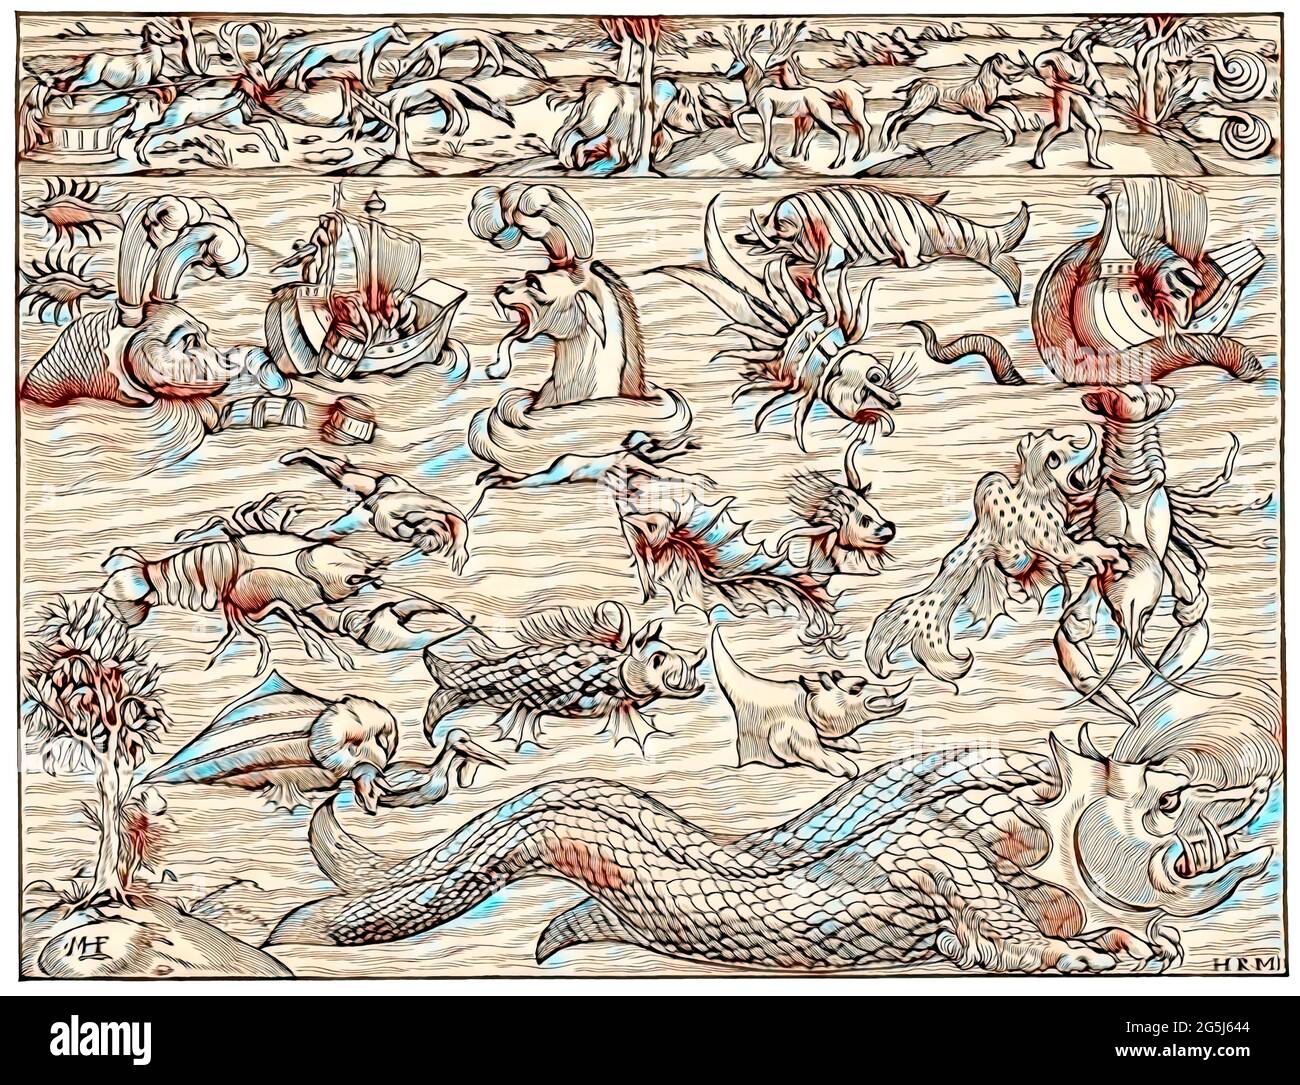 Land and sea monsters, based on Sebastian Munster's 'Comograhia uiversalis” from 1550, digitally edited Stock Photo